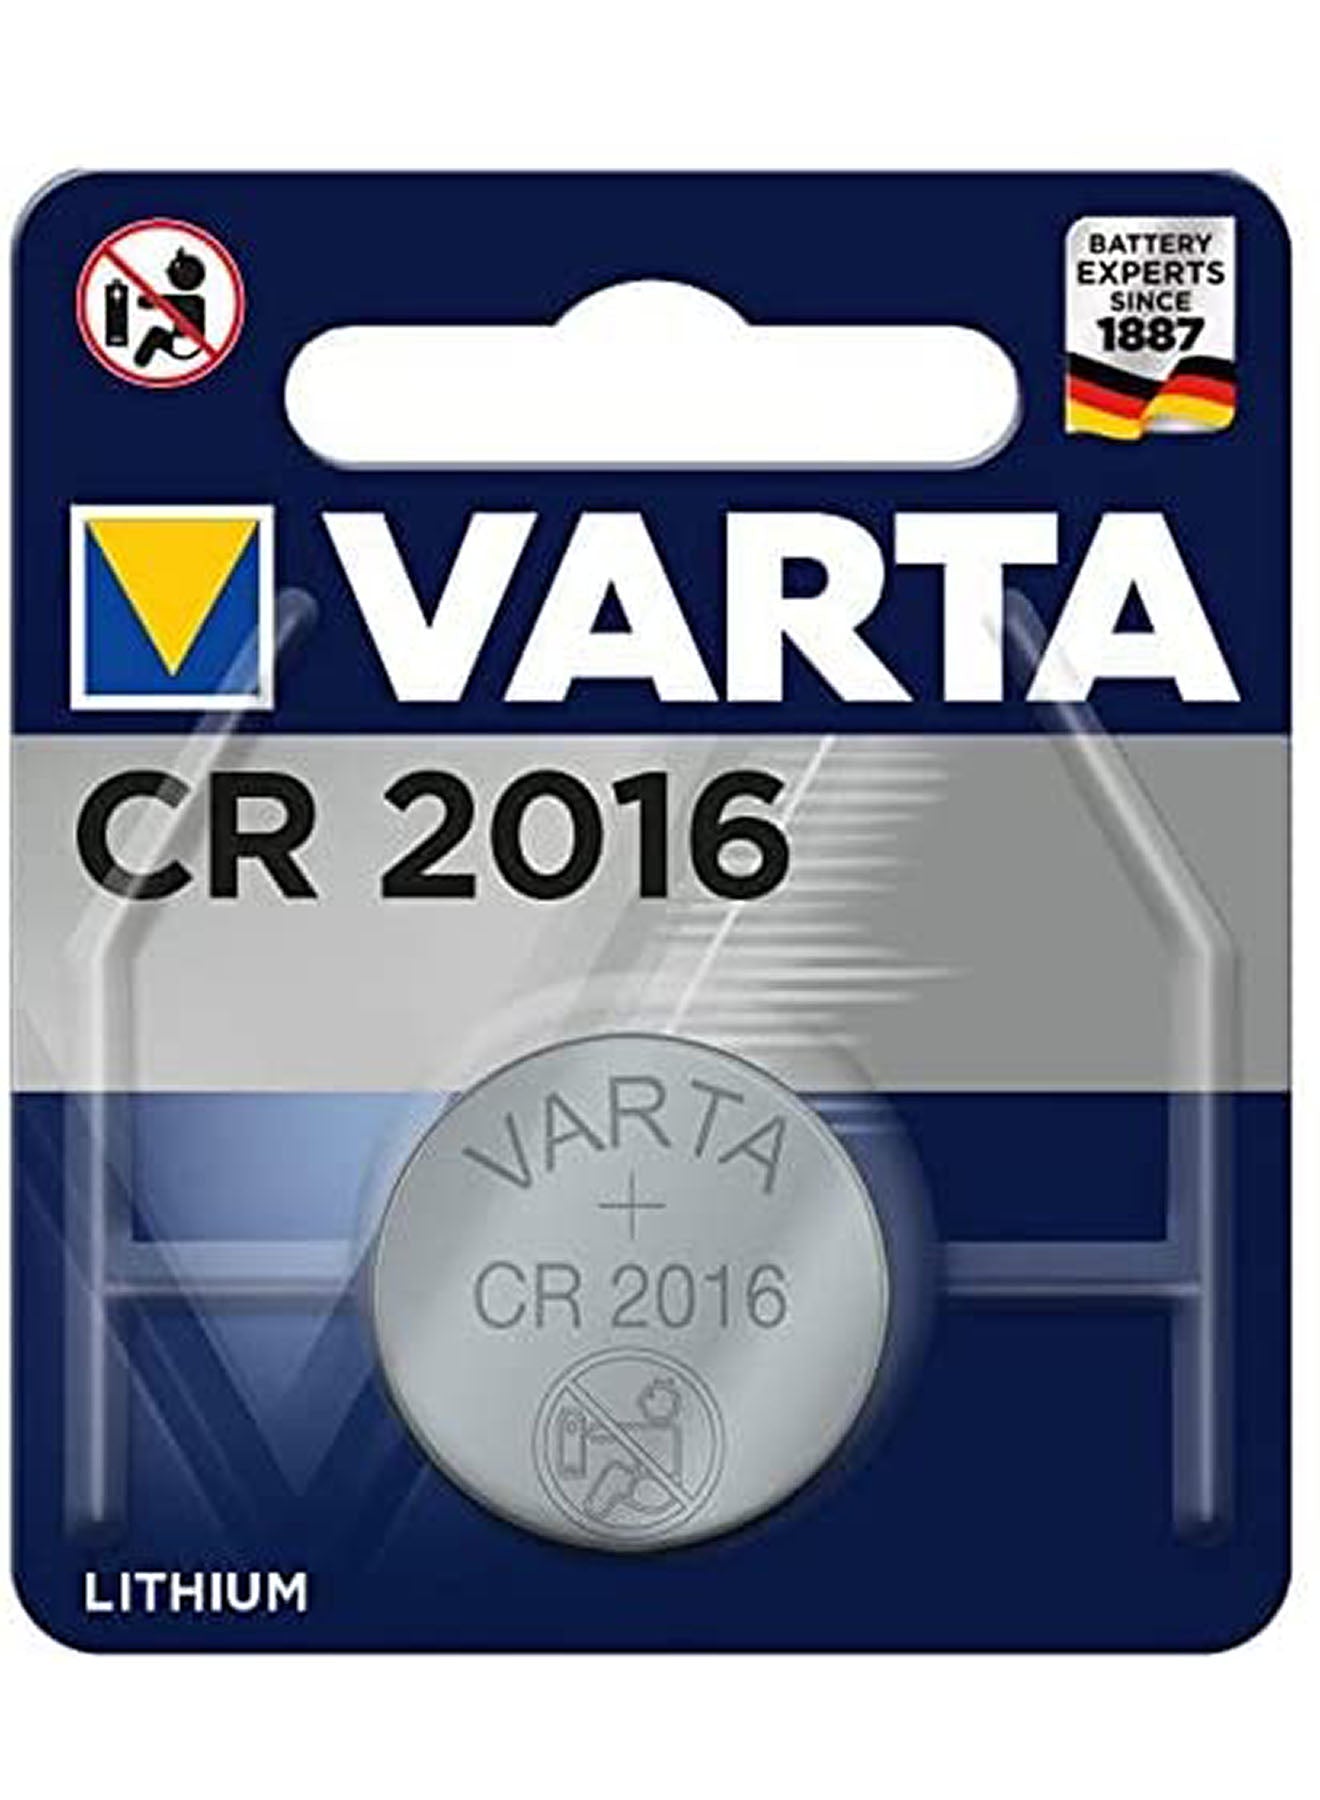 Varta Lithium CR 2016 Battery Button Cel 3 Volt Value Pack of 3 